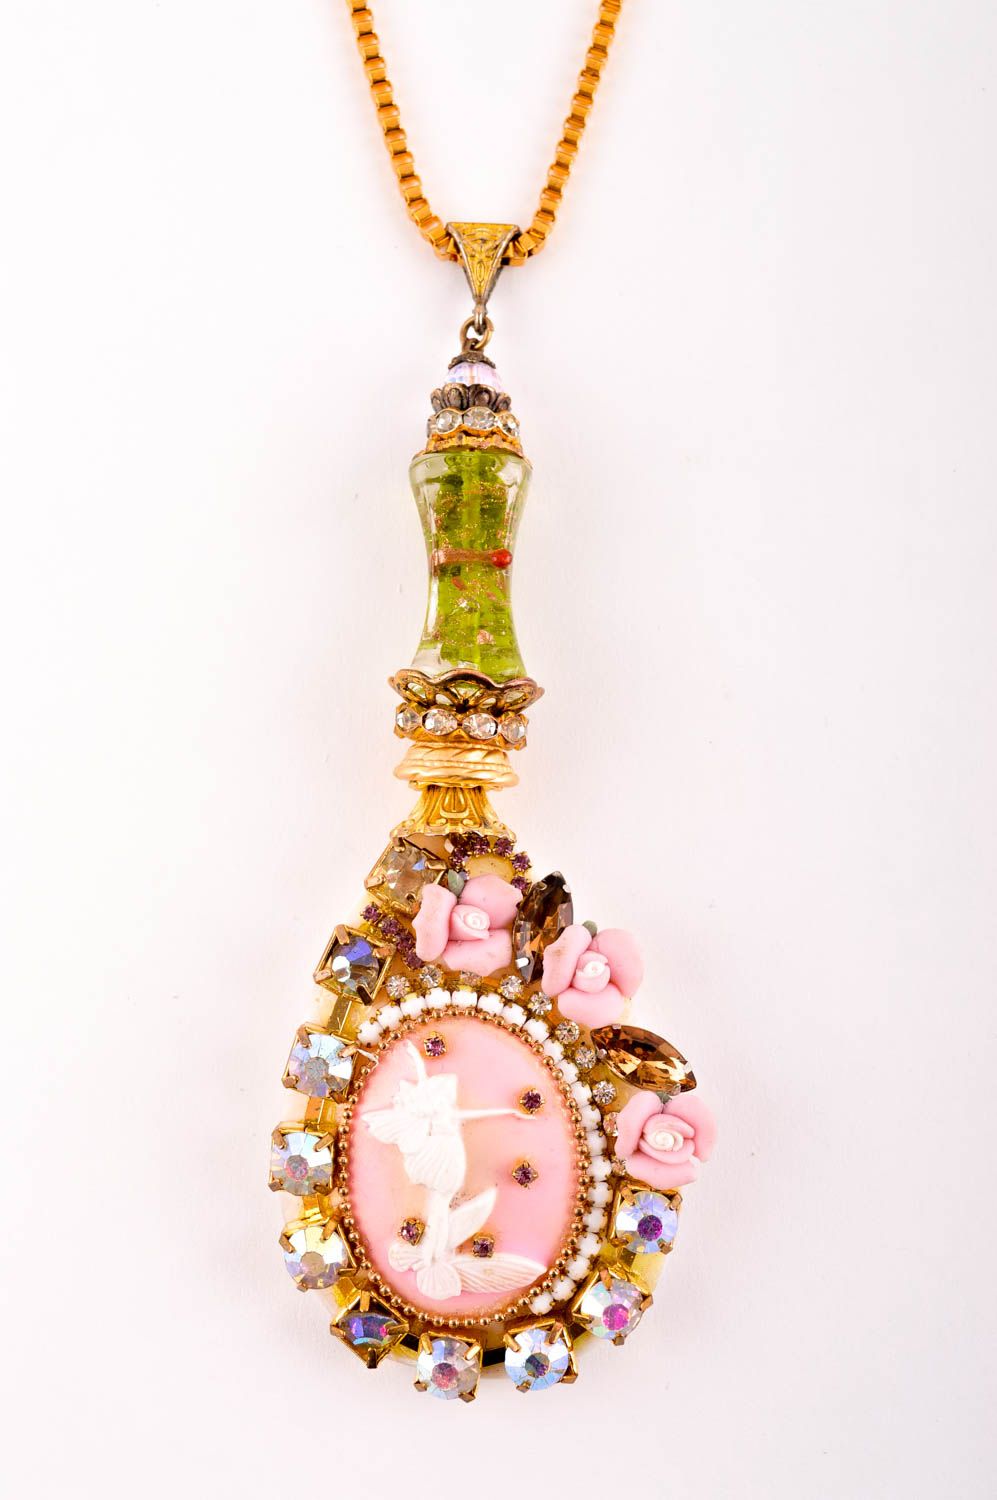 Handmade pendant unusual pendant for women designer accessory with stones photo 3